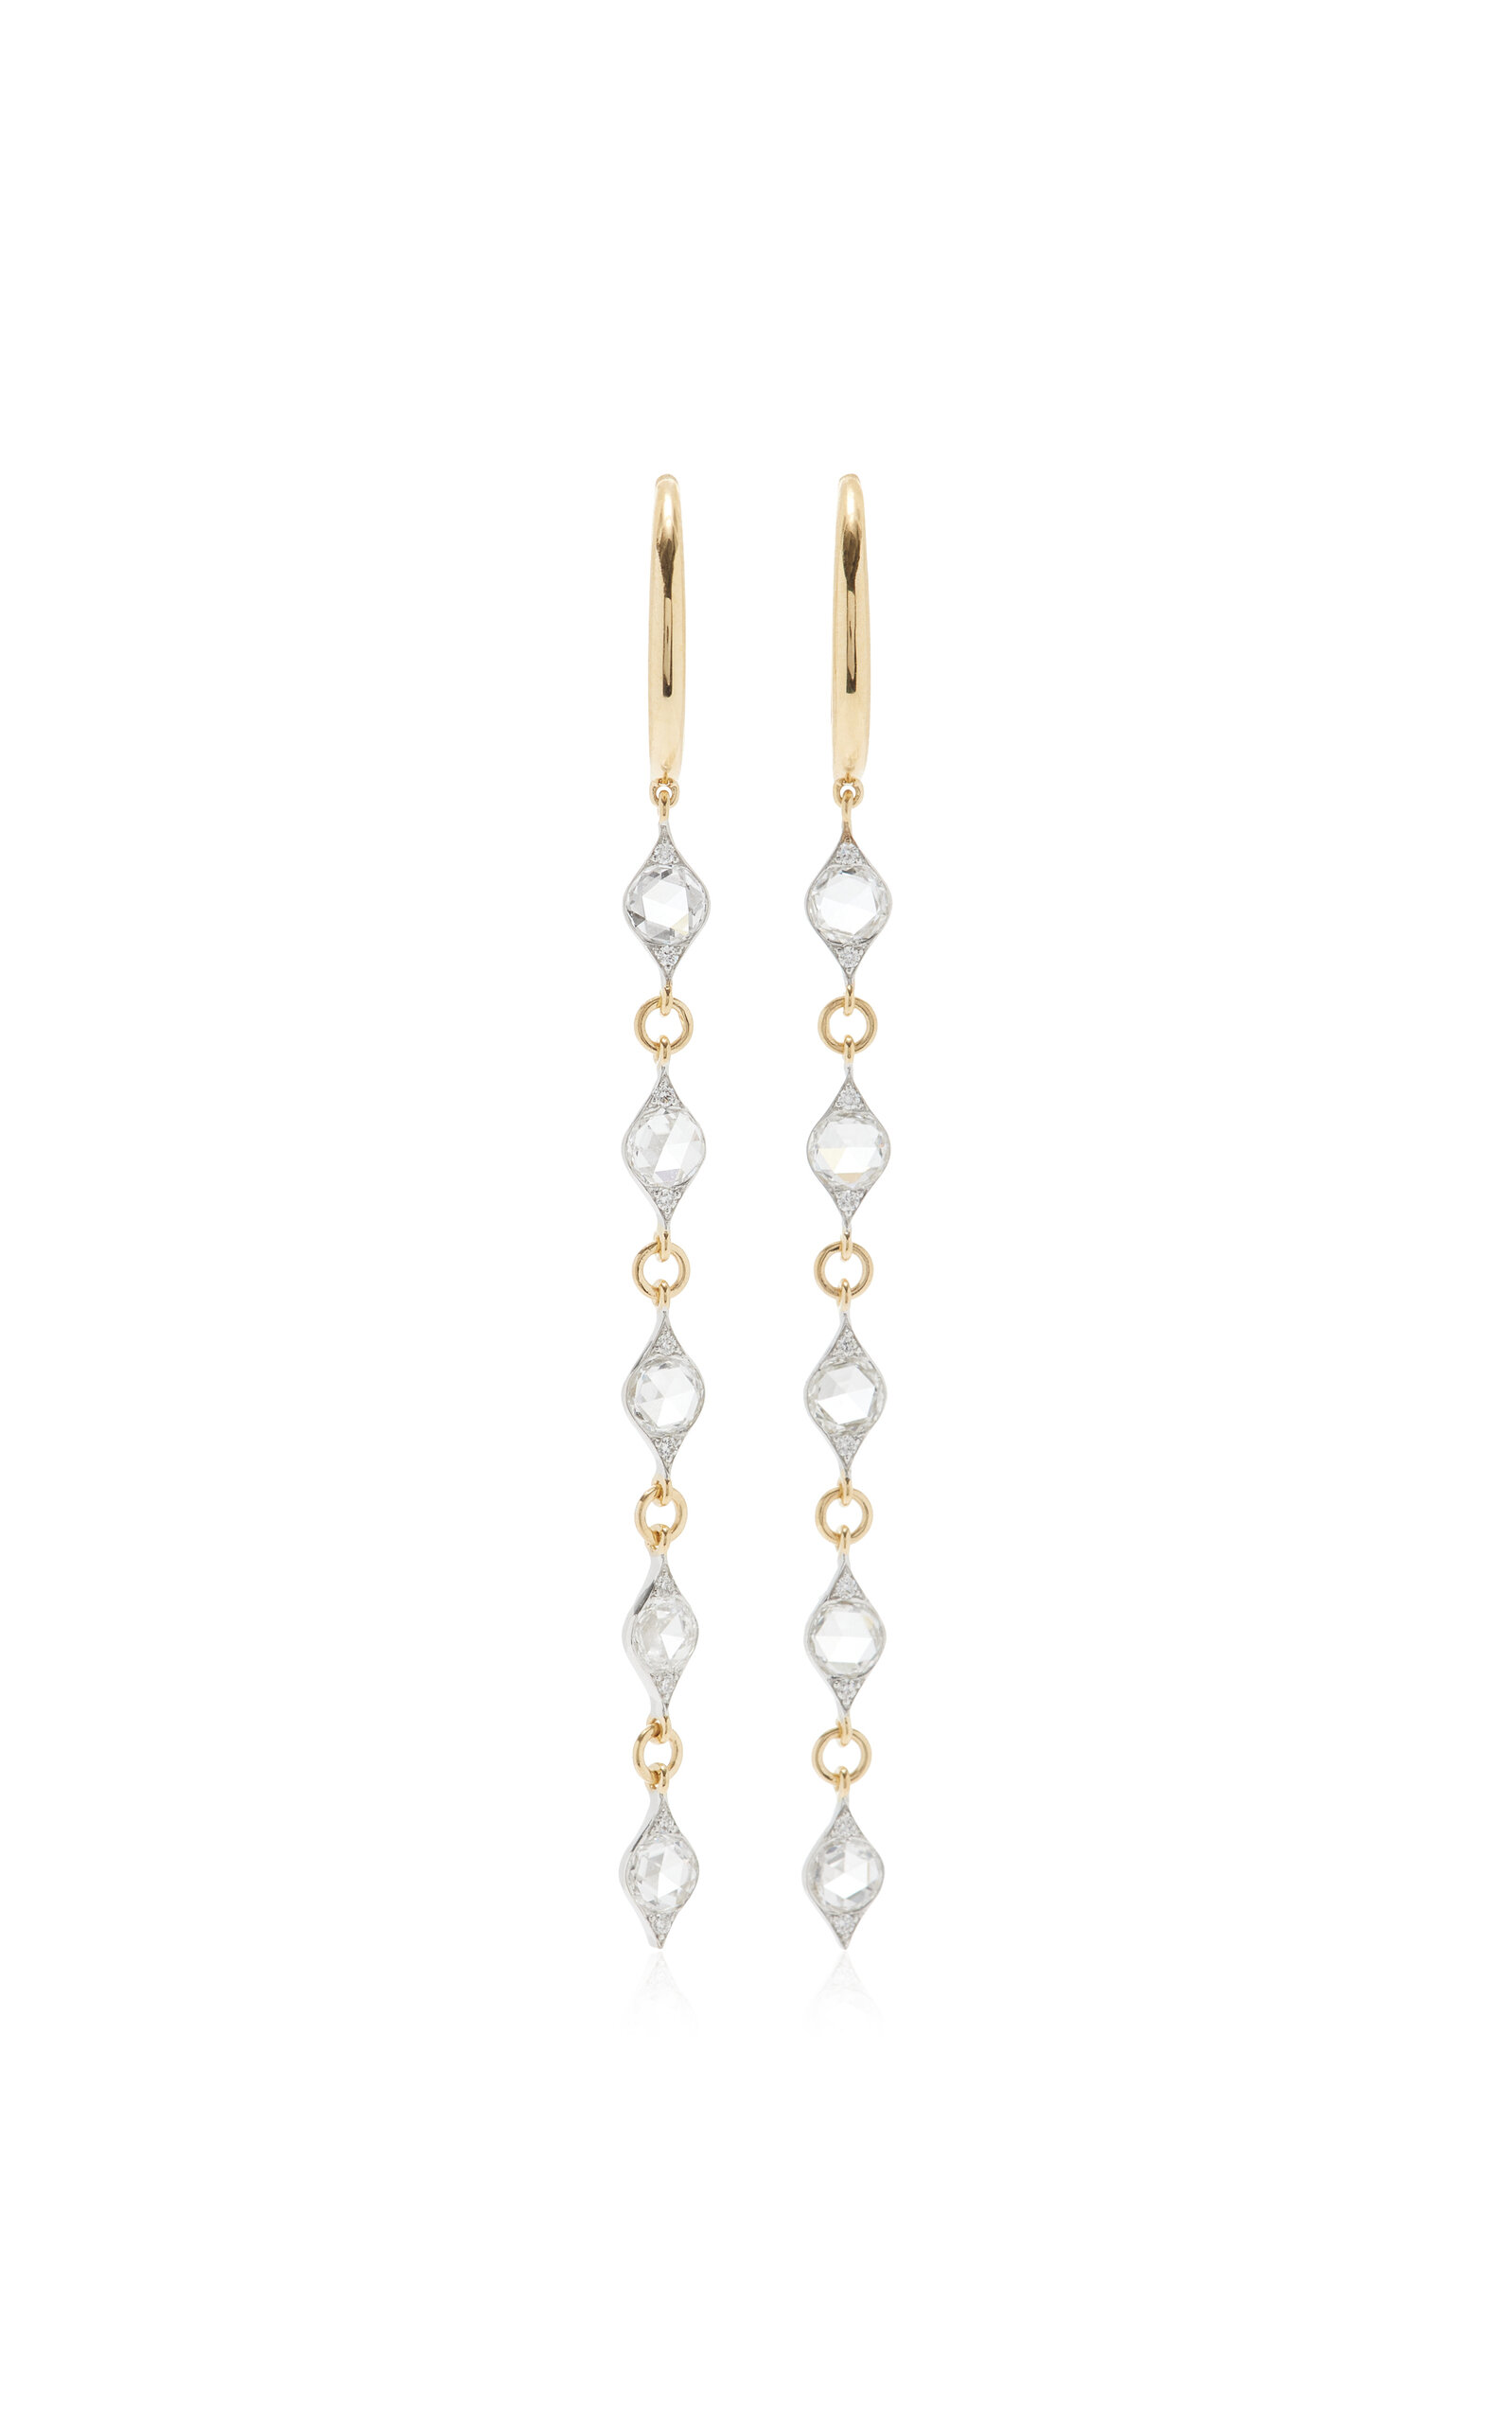 Haveli 18K White and Yellow Gold Diamond Earrings